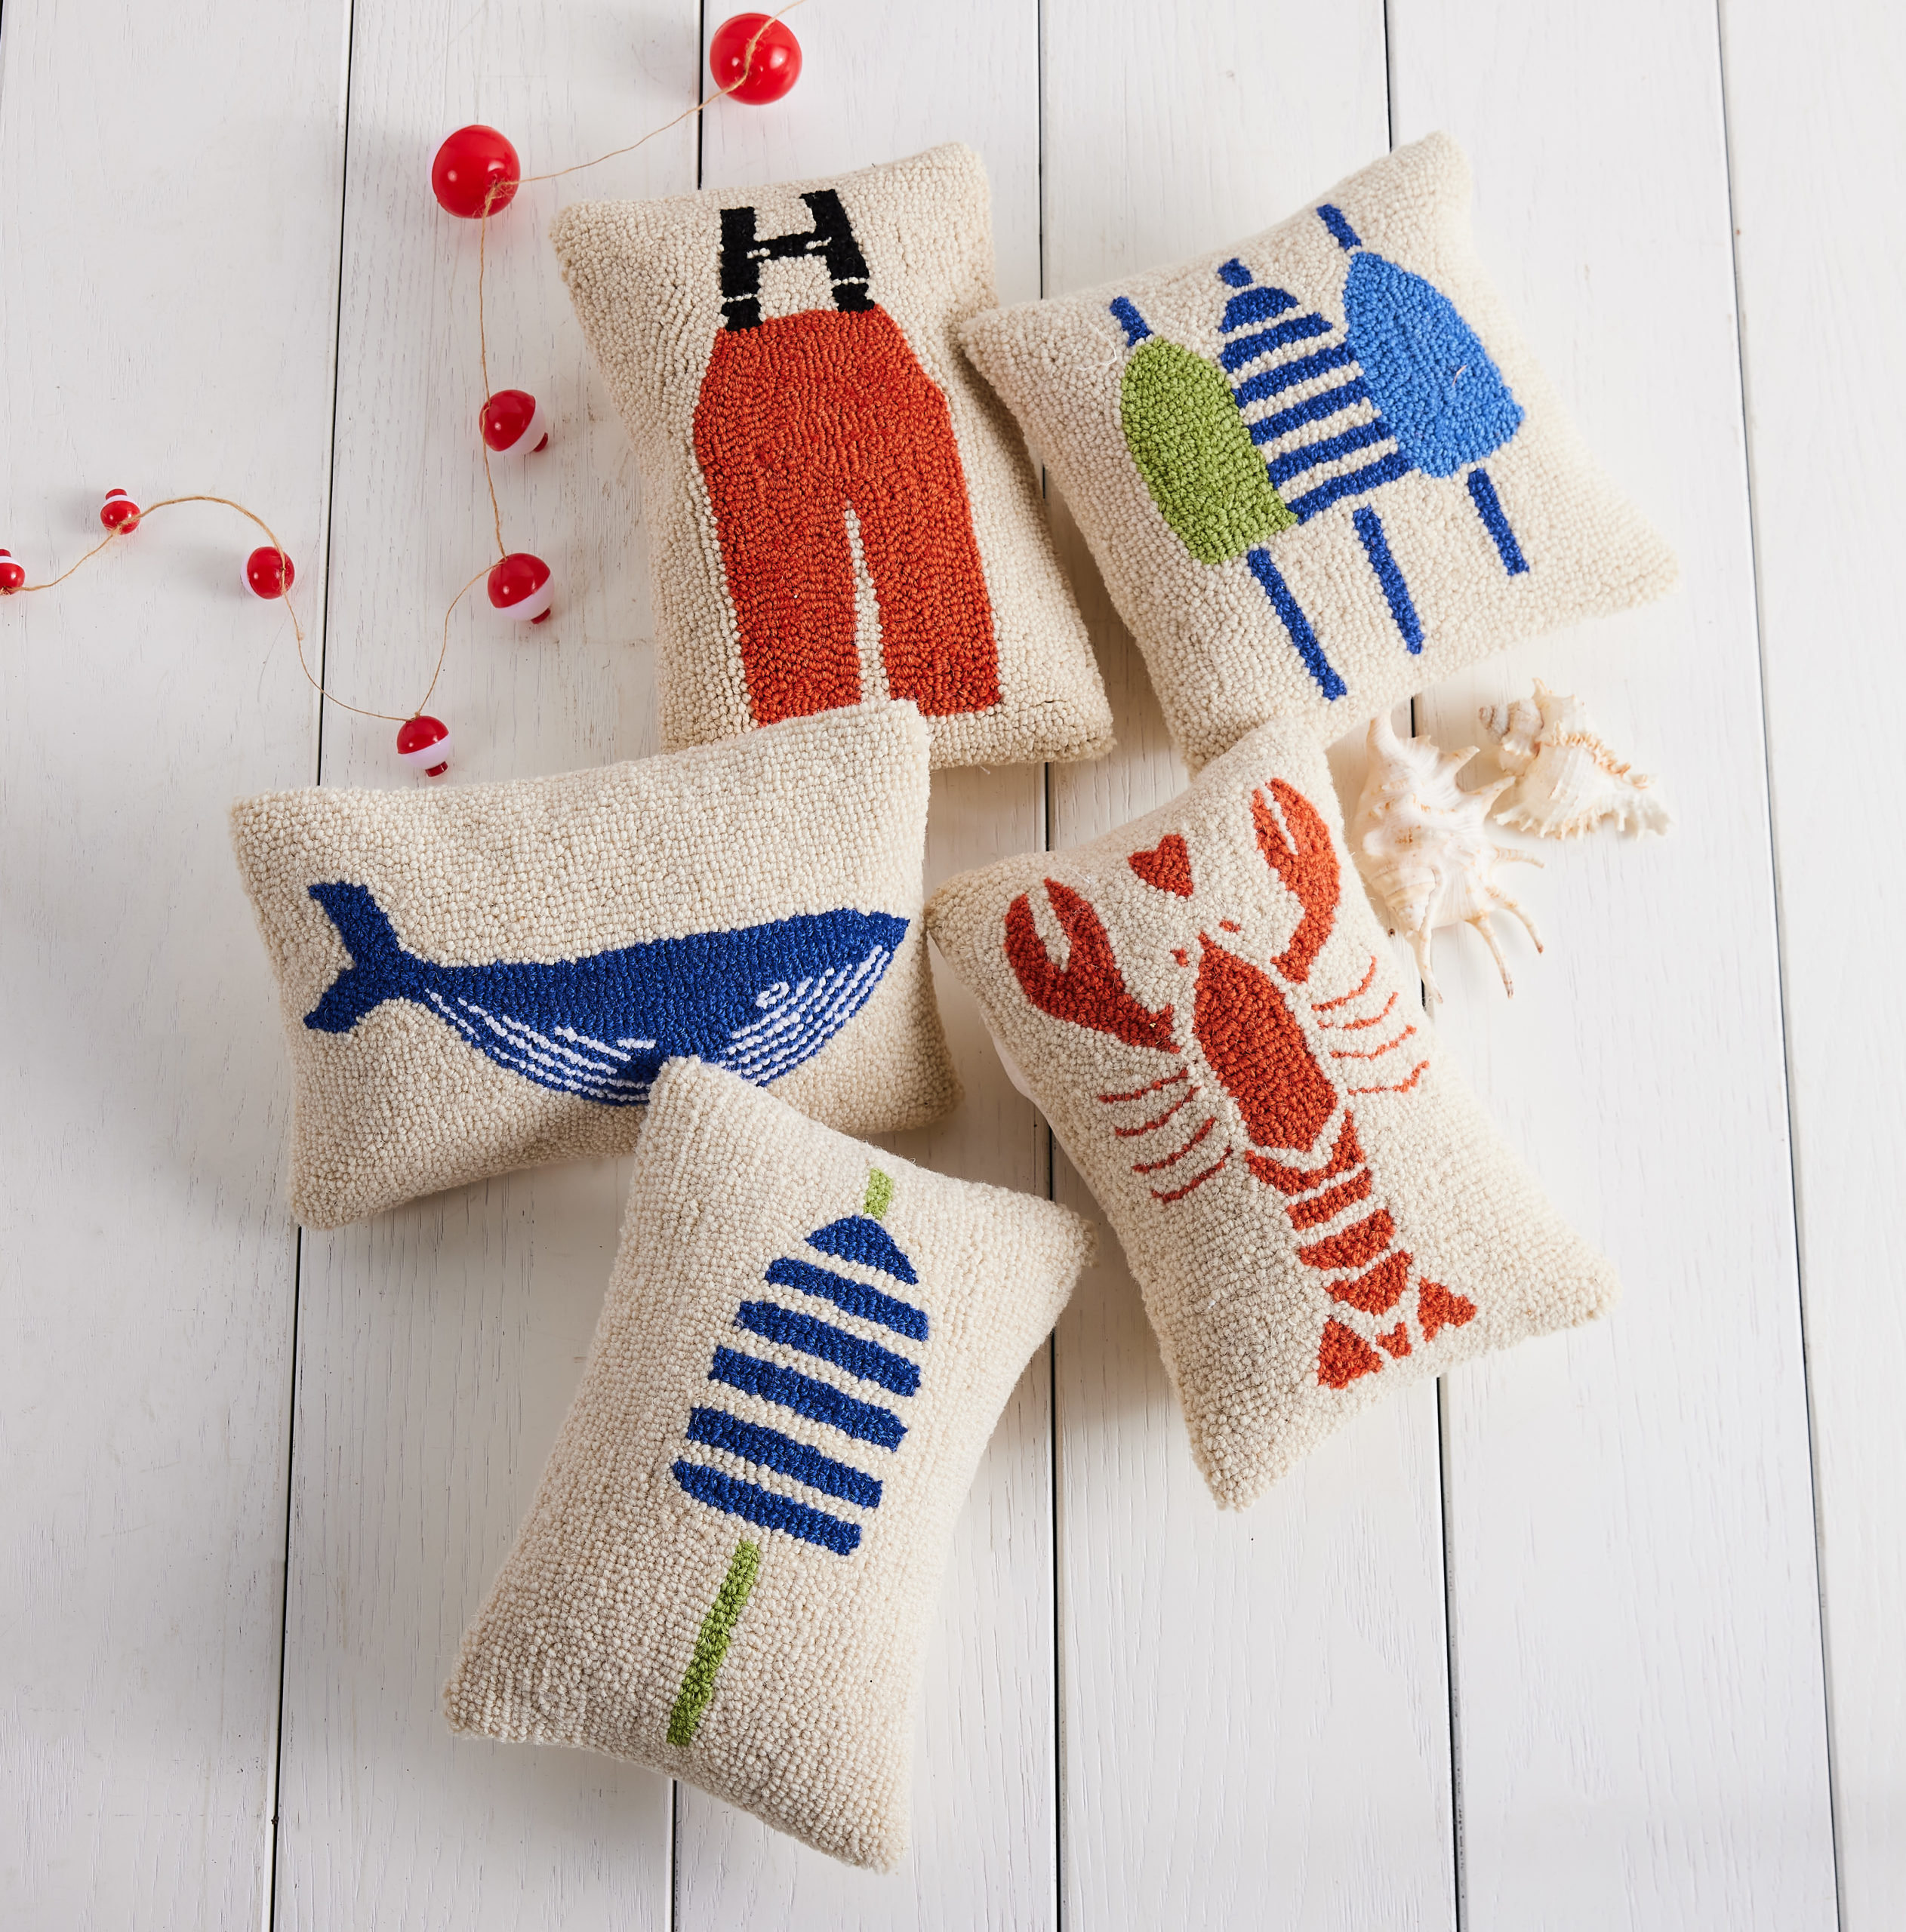 Coastal Living Hook Pillows by designer Kate Nelligan